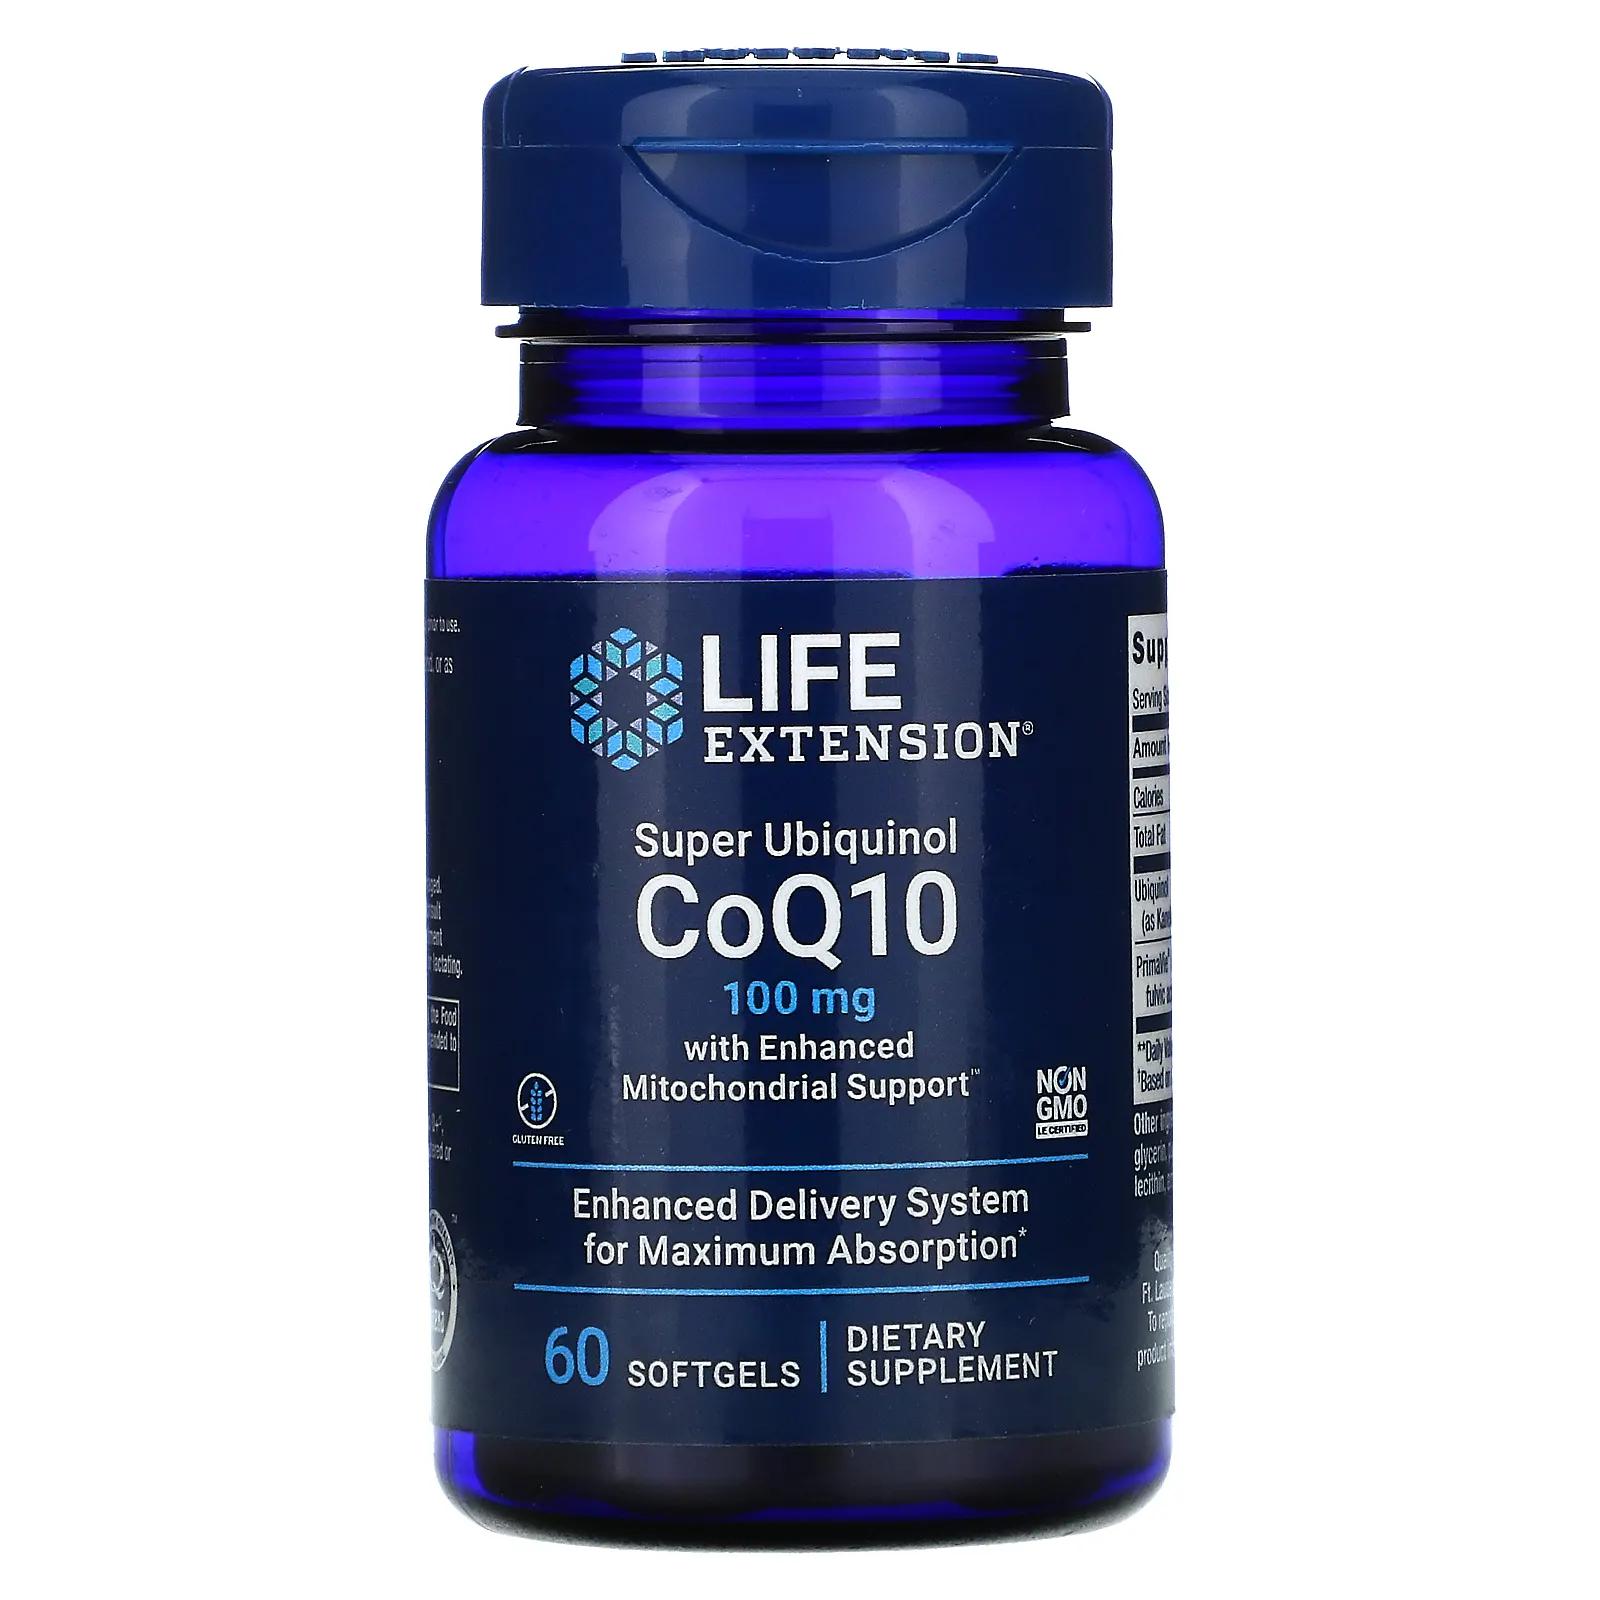 продление жизни супер мирафорте со стандартами life extension Life Extension Super Ubiquinol CoQ10 with Enhanced Mitochondrial Support 100 mg 60 Softgels